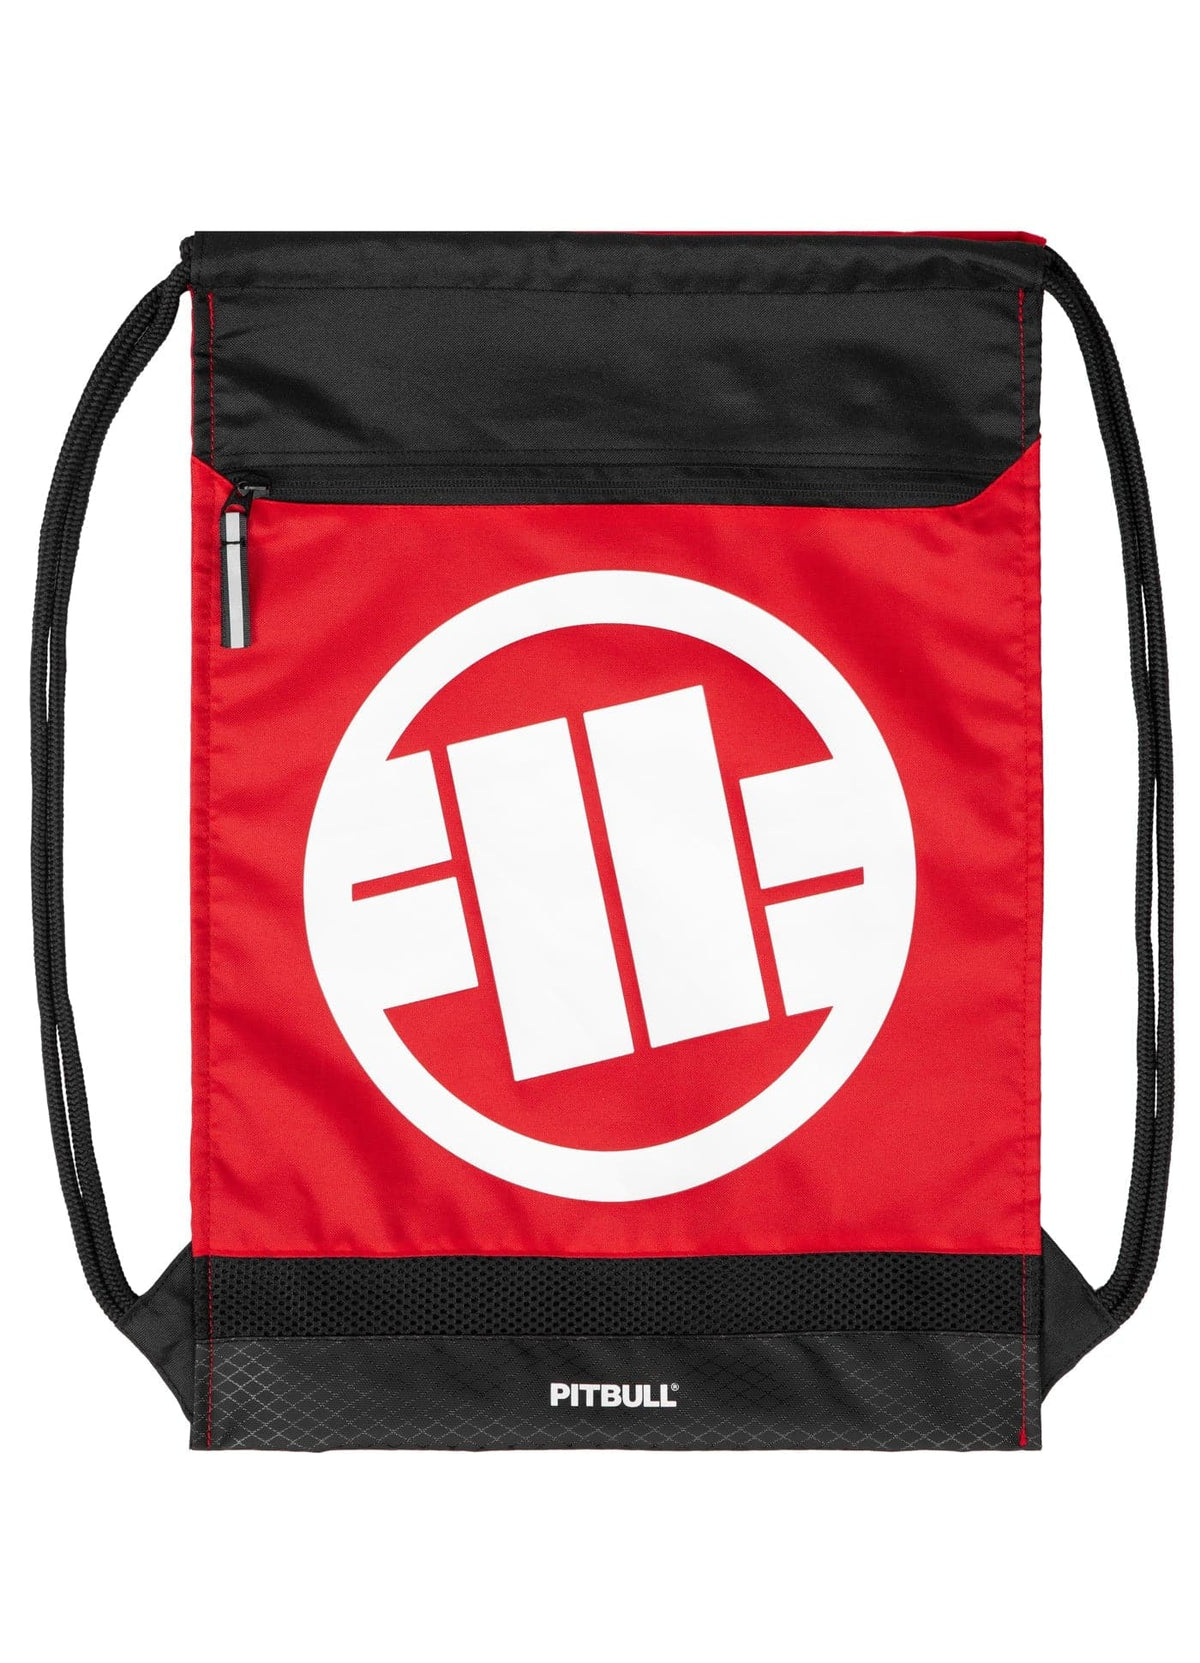 LOGO 2 Red Gym Sack Bag